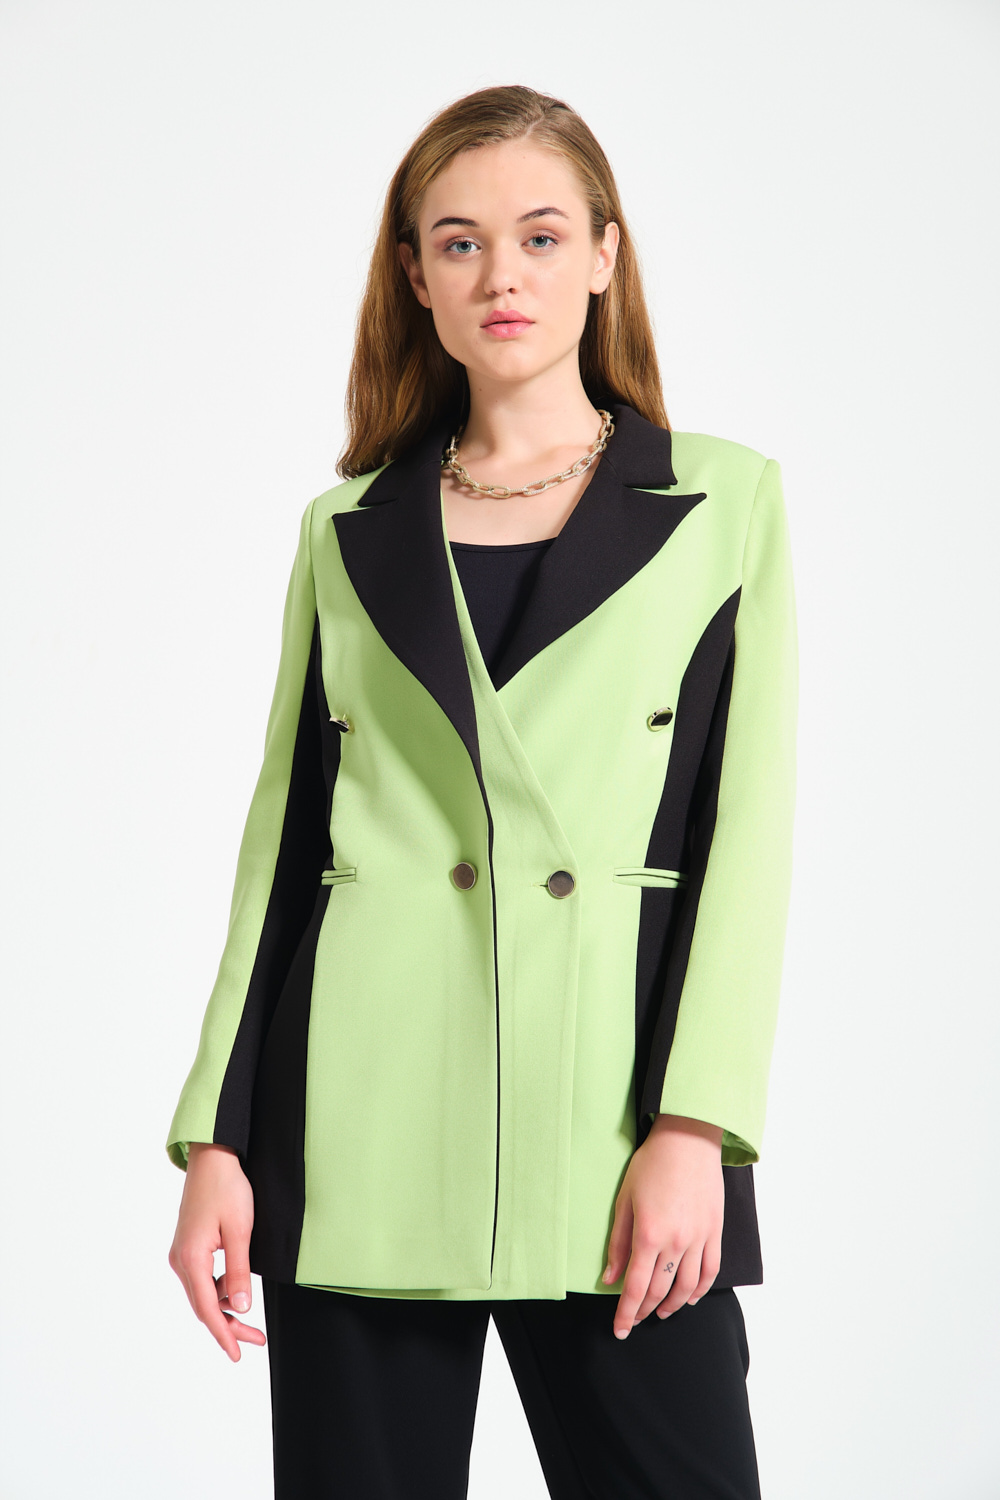 Pistachio Green Blazer Jacket